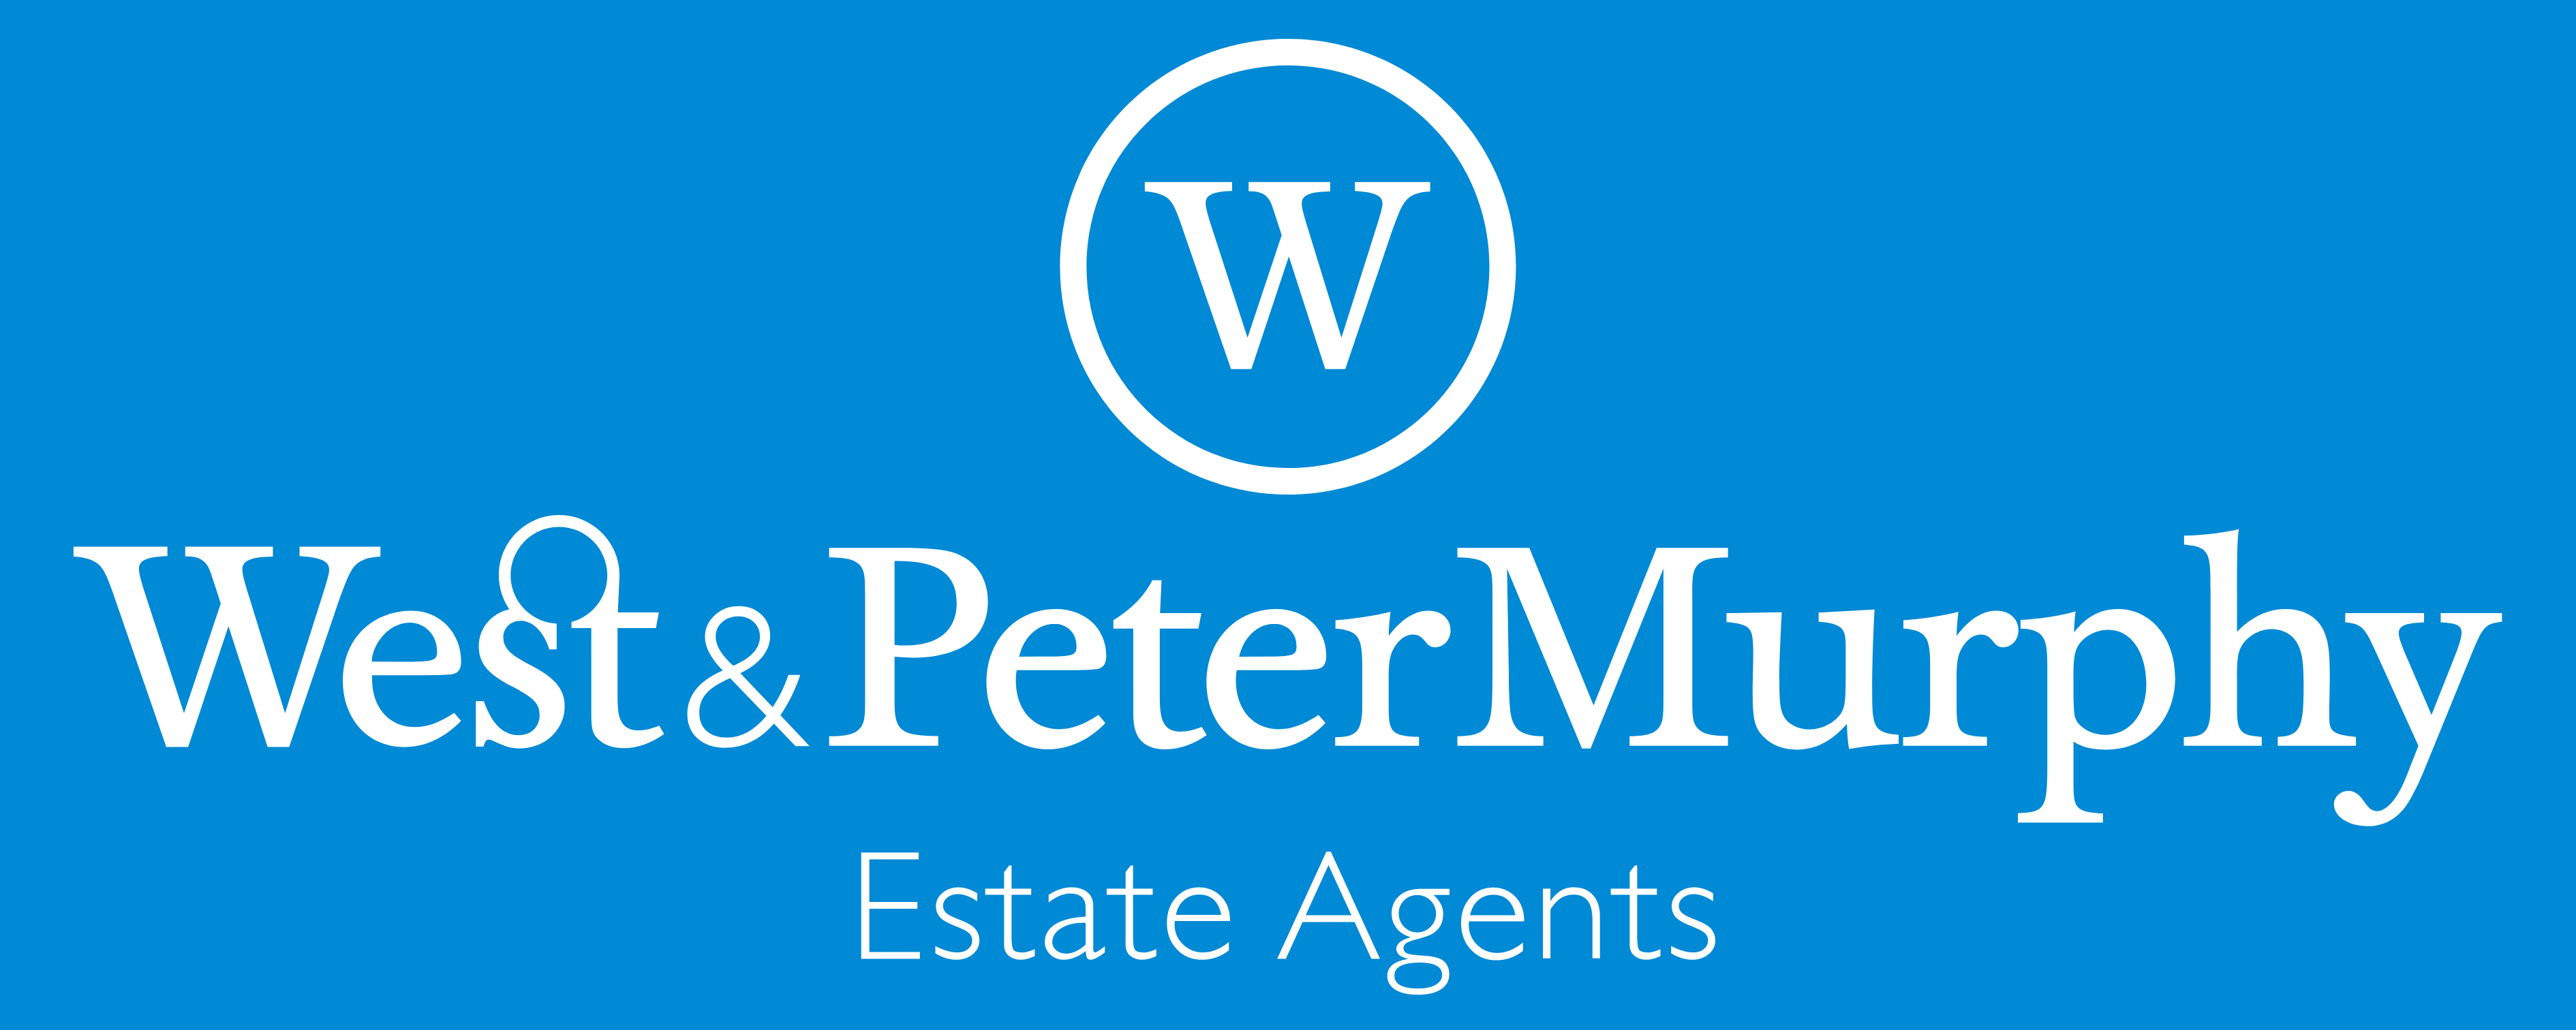 West & Peter Murphy Estate Agents